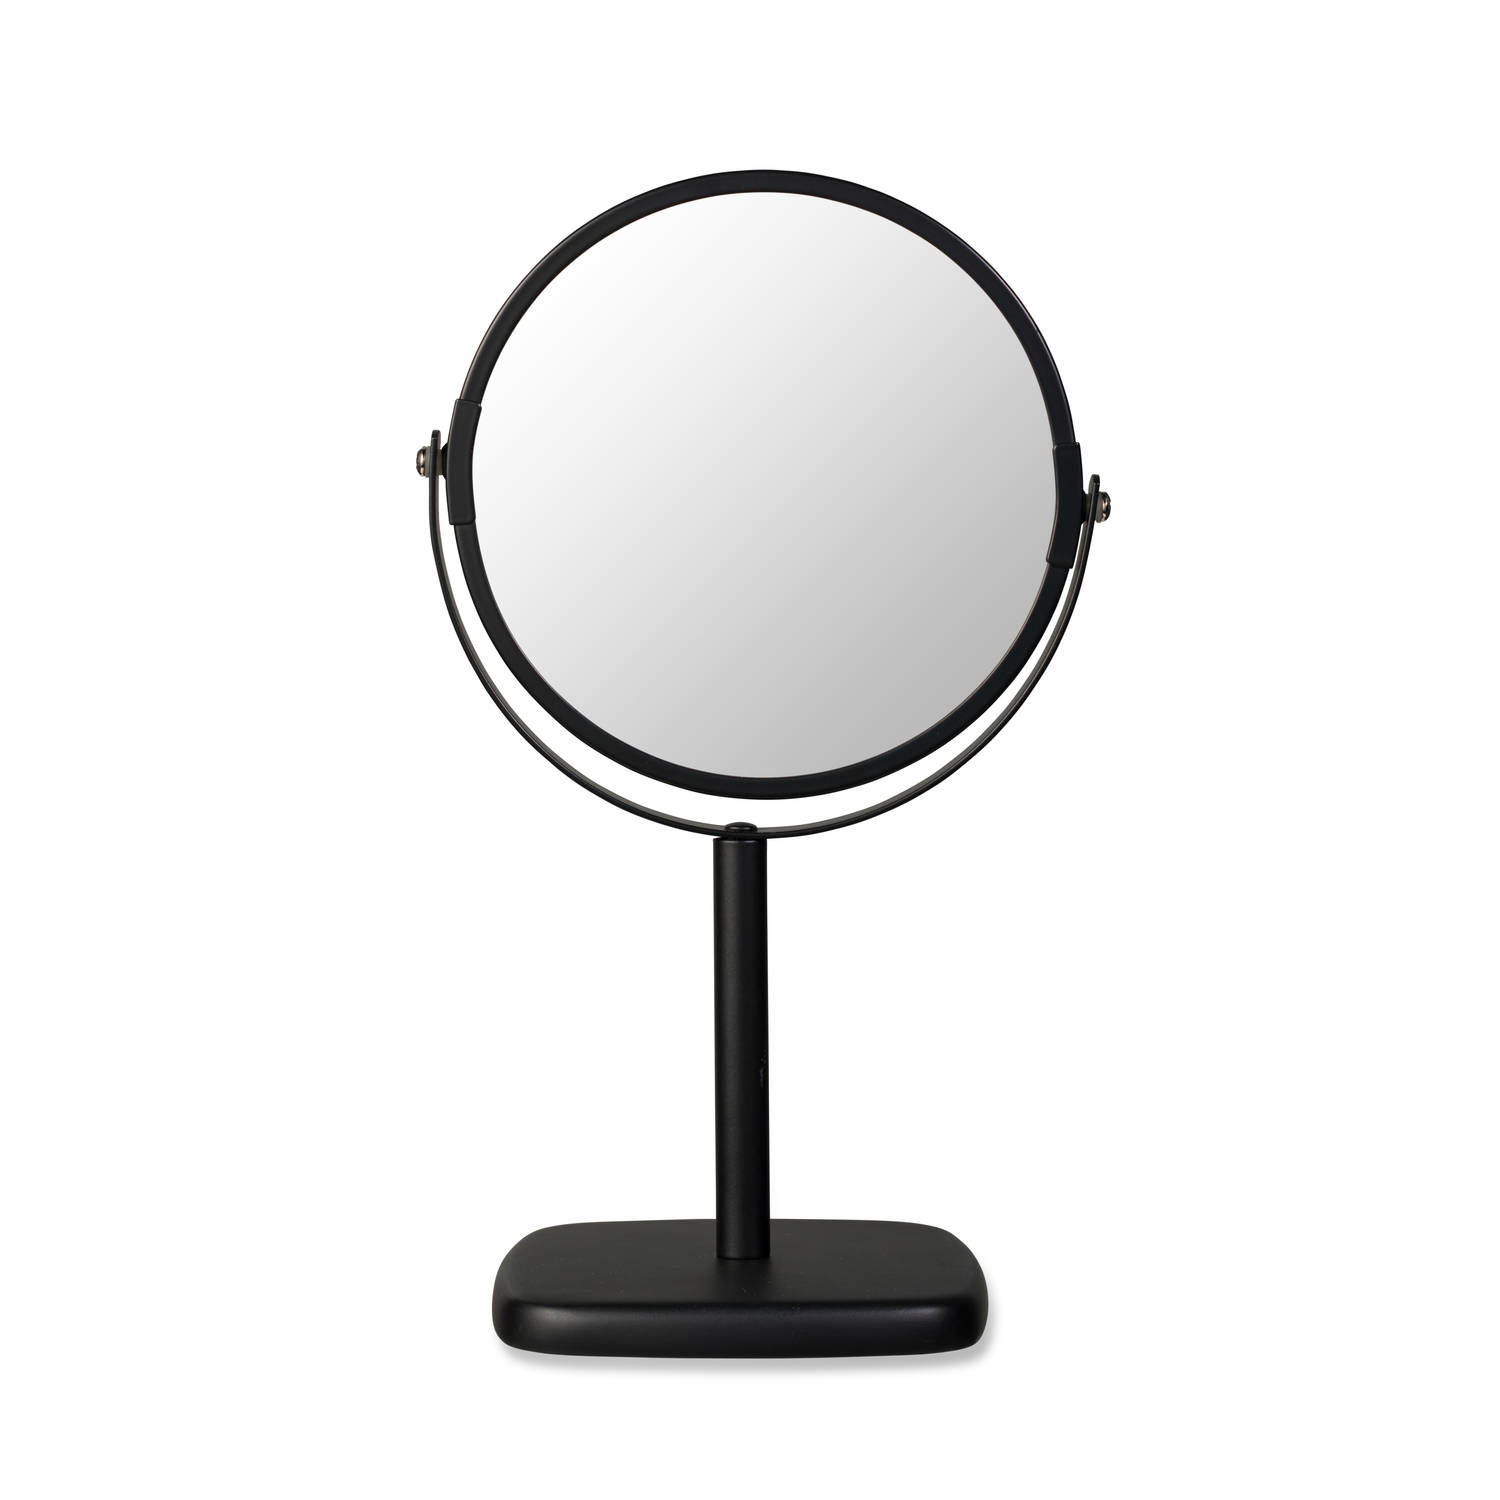 Scherm microscoop premie Blokker make-up spiegel - zwart | Blokker